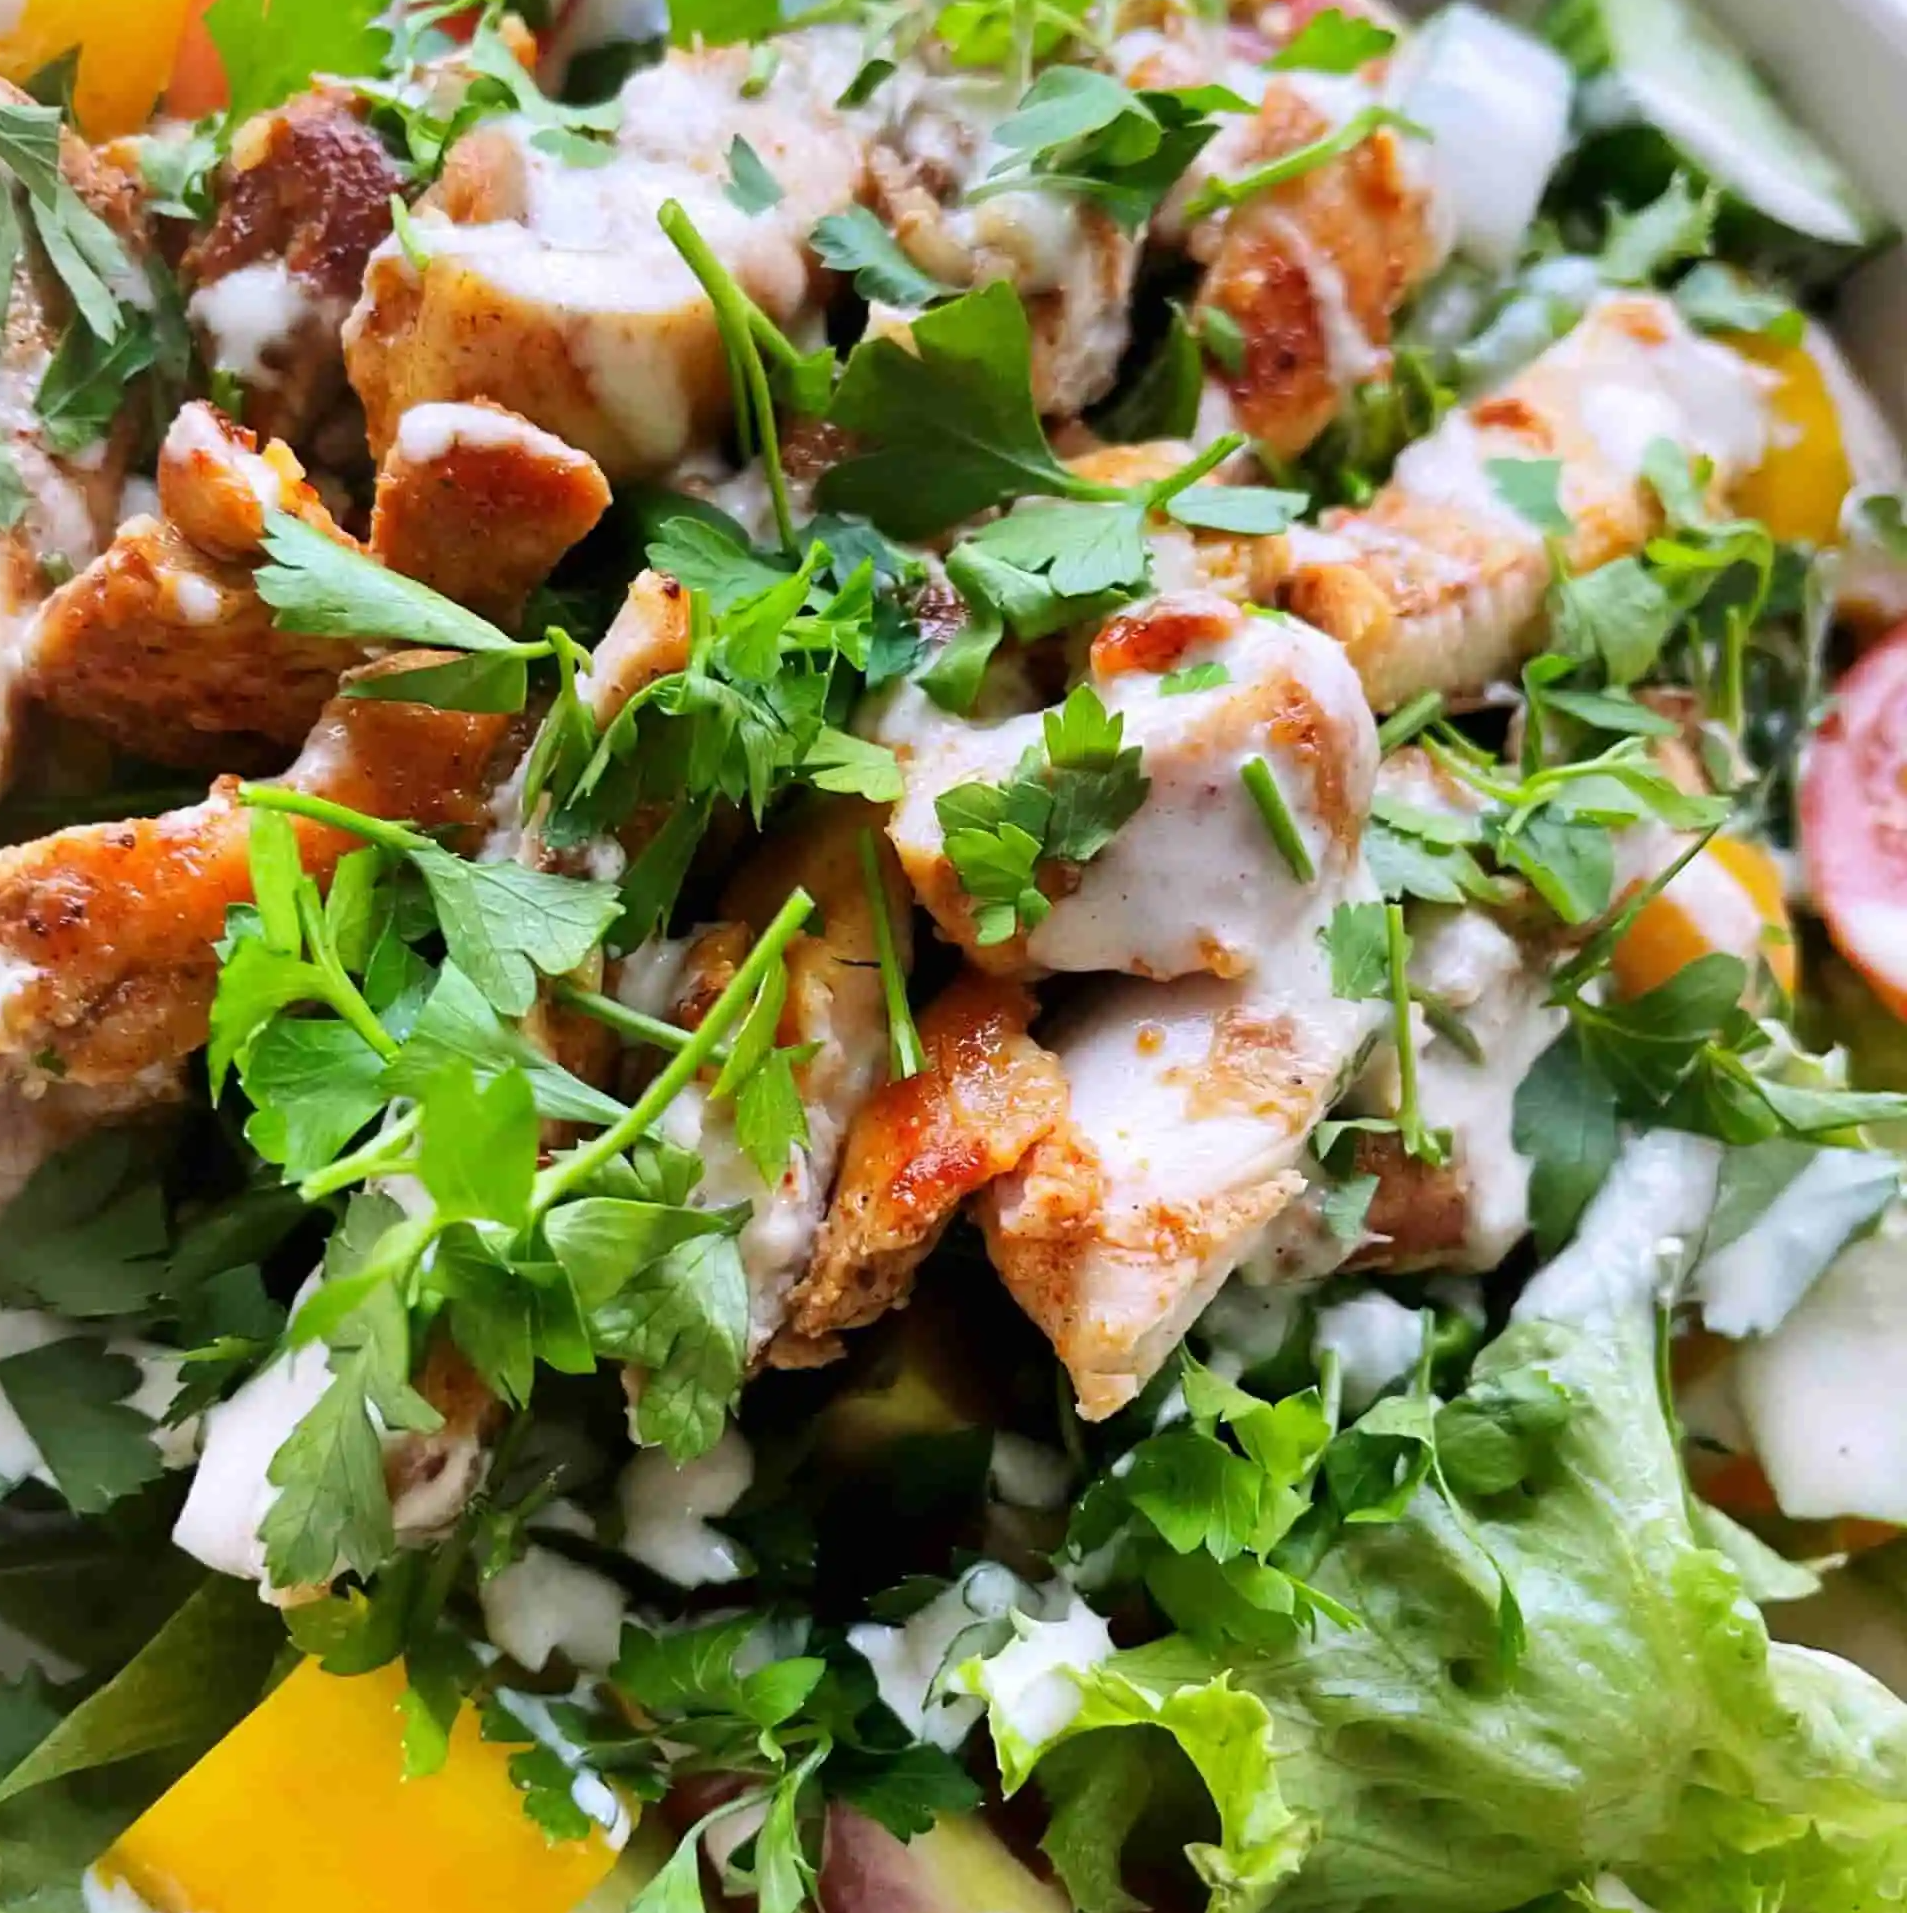 Shawarma Salad with Garlic Chili Oil